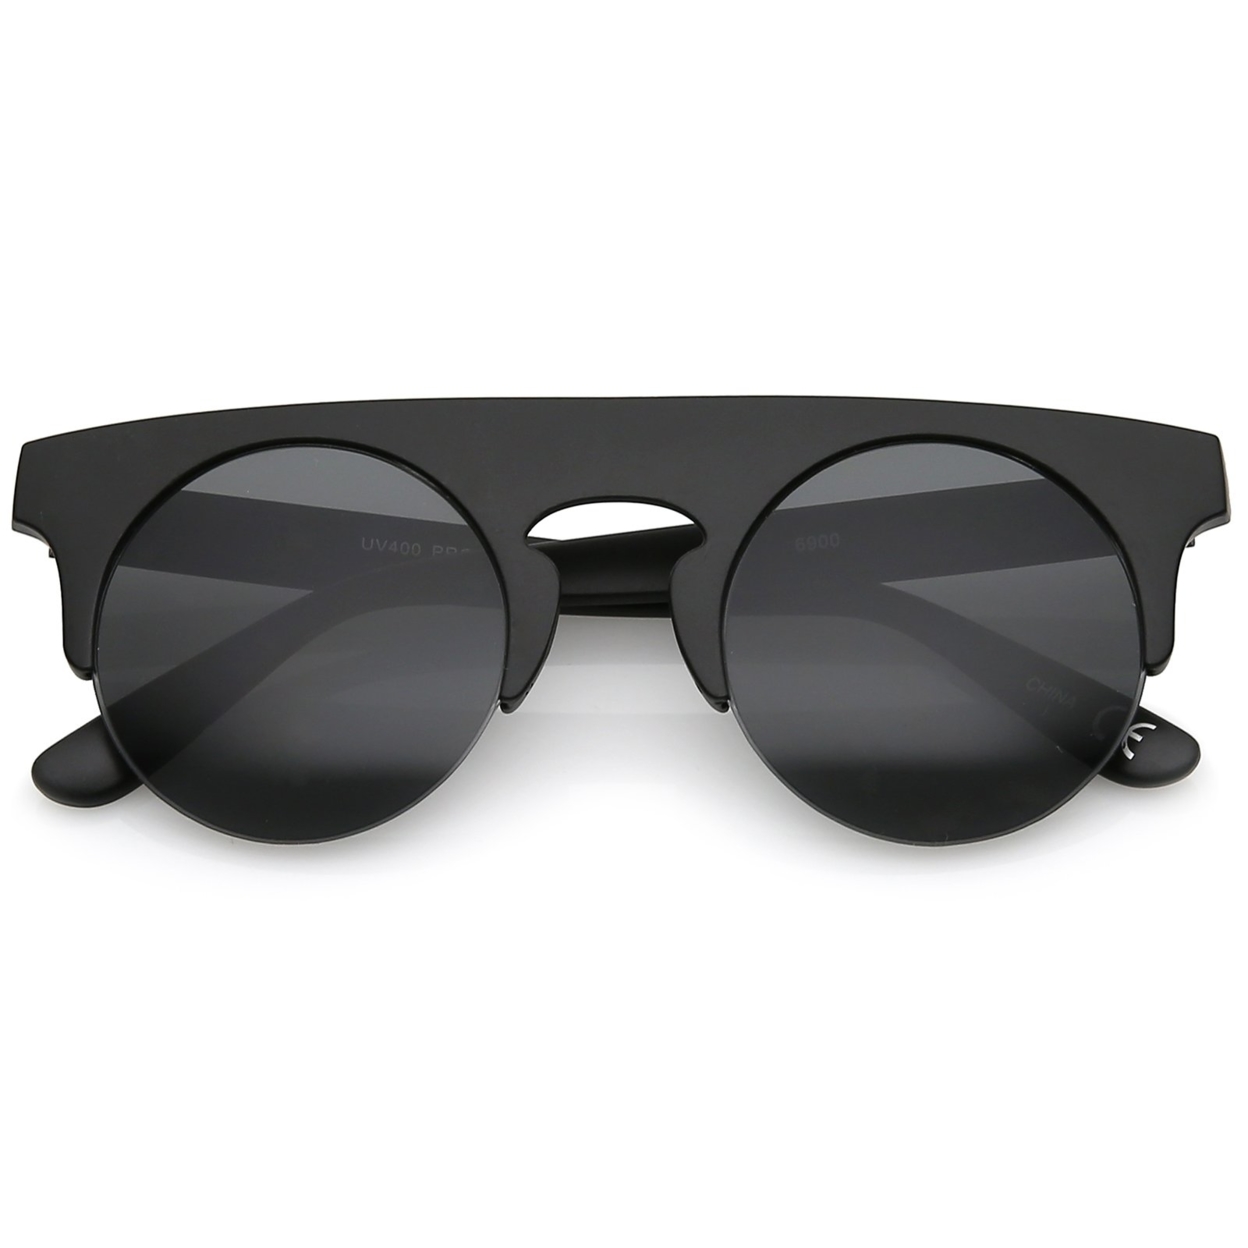 Modern Flat Top Horn Rimmed Round Flat Lens Semi Rimless Sunglasses 48mm - Black / Yellow Mirror